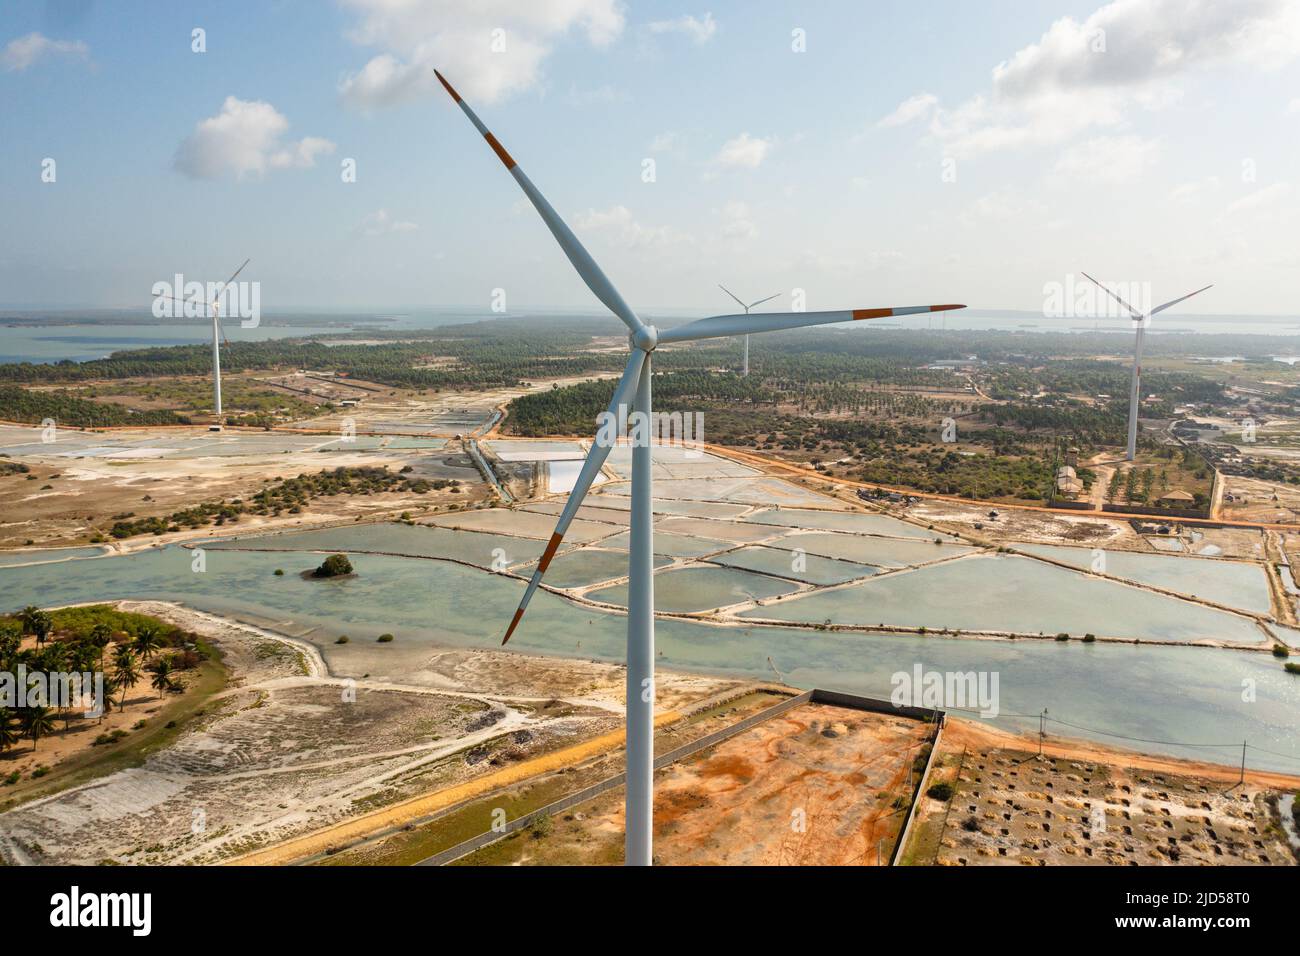 Turbine eoliche che producono energia pulita sostenibile, energia pulita futuro. Impianto eolico. Kalpitiya, Sri Lanka. Foto Stock